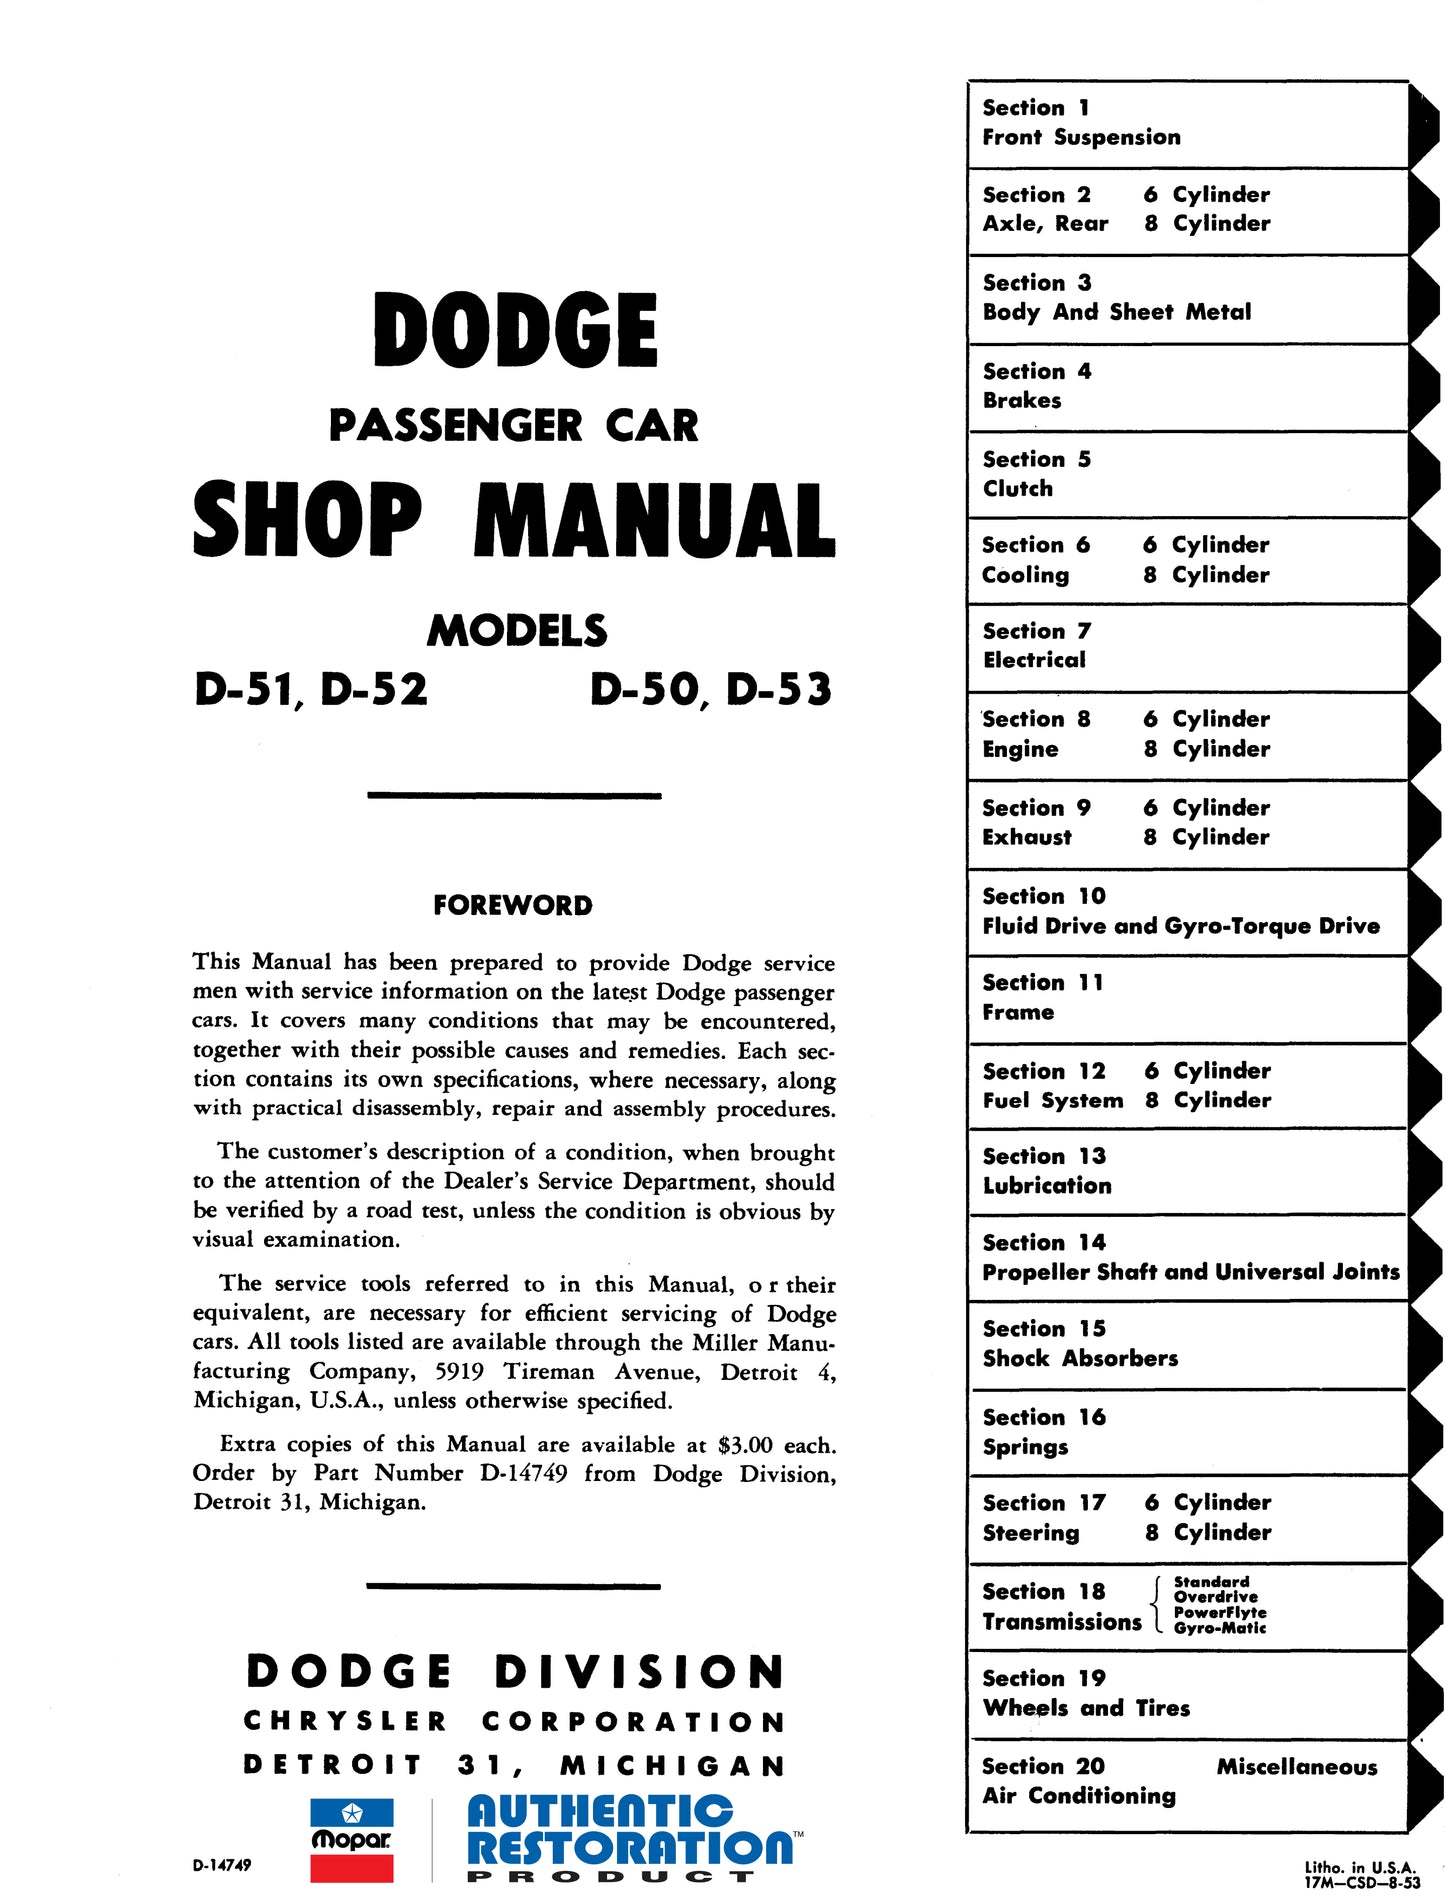 1954 Dodge Service Manual - All Models